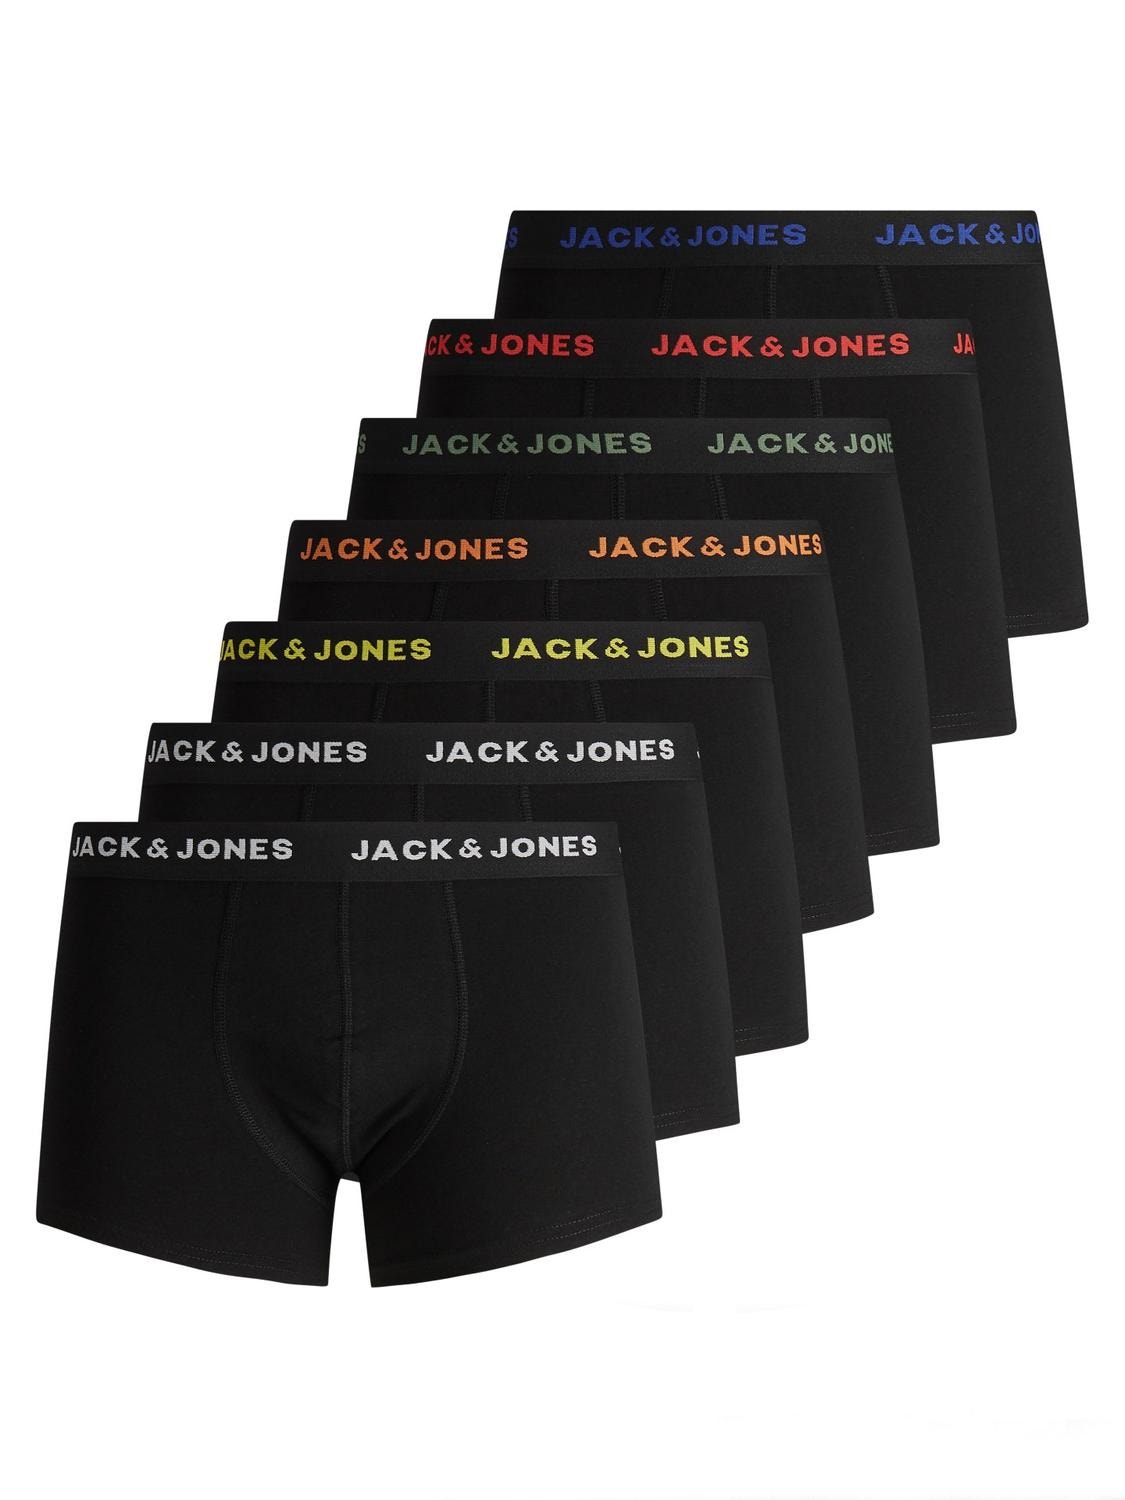 Jack & Jones 7-pak Trunks -Black - 12165587